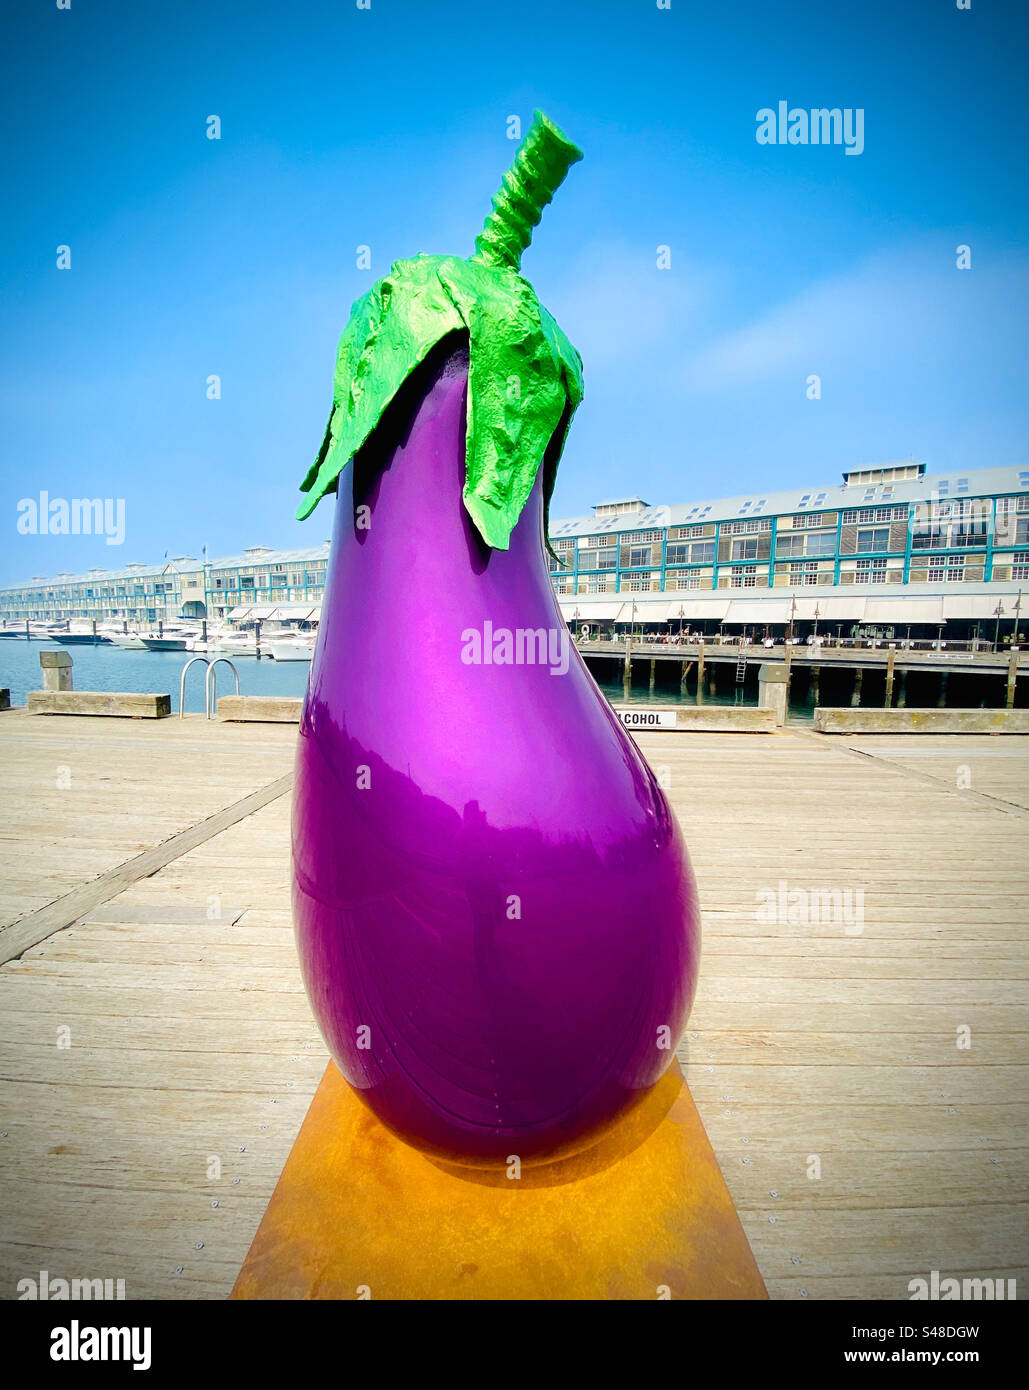 6 foot tall Eggplant statue by artist Aldo Bilotta at Wooloomooloo wharf in Sydney, Australia Stock Photo